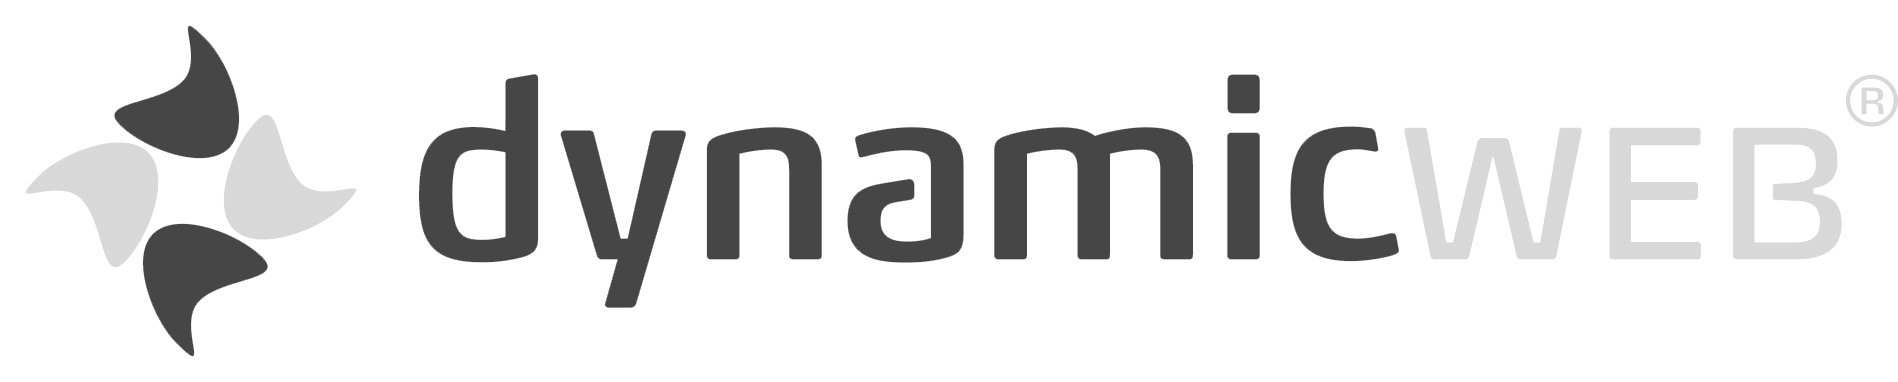 Dynamicweb Logo - Transparent - 1898 px.png